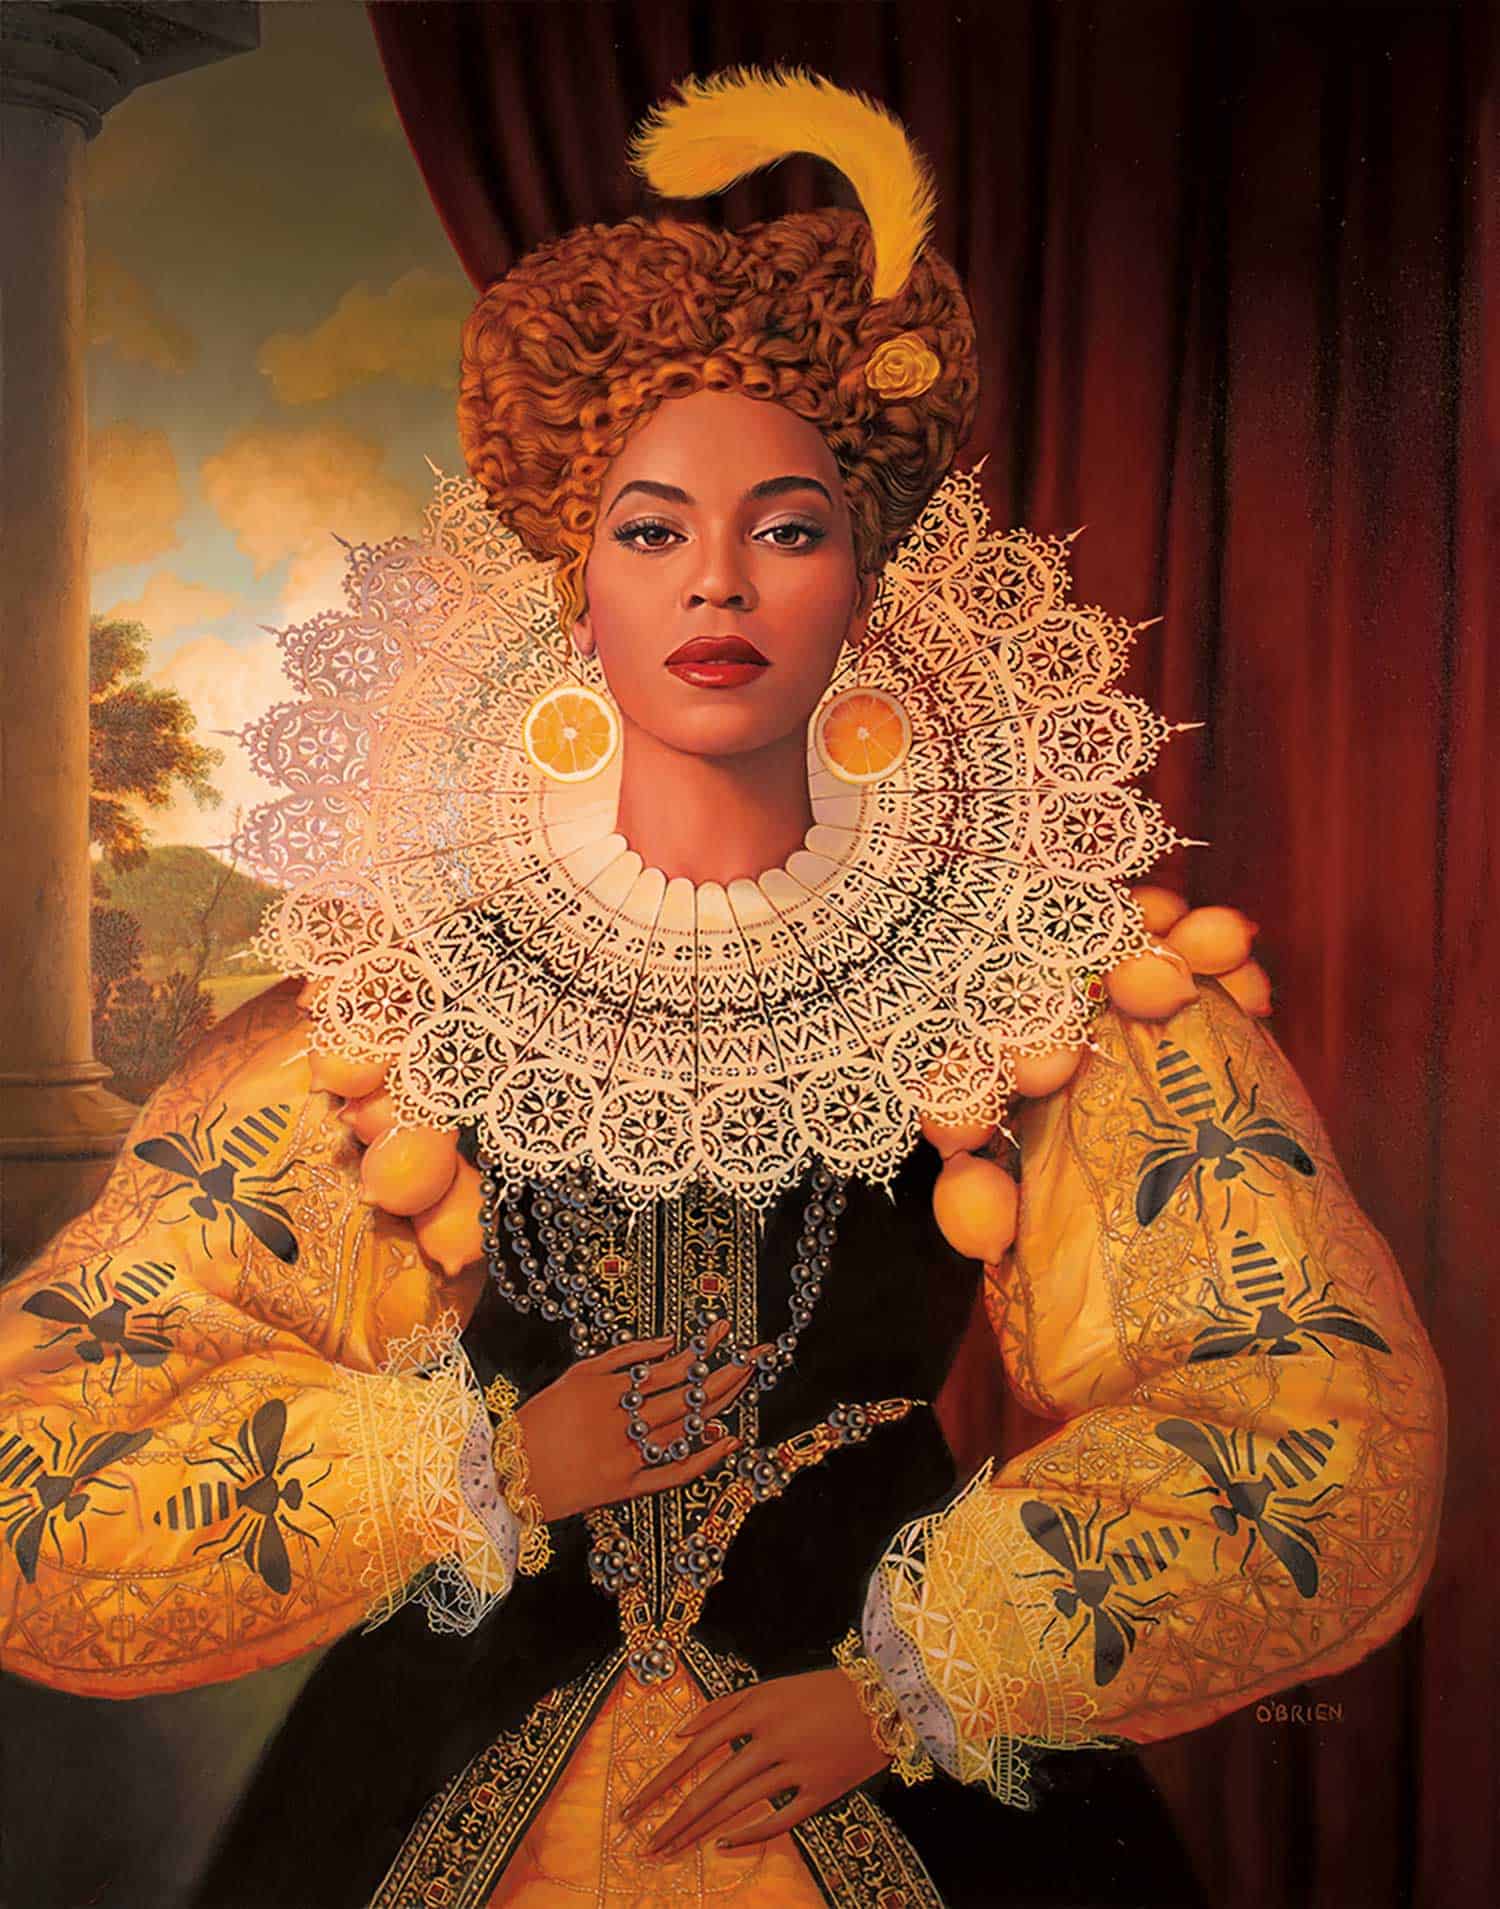 Tim O'Brien painting of Beyonce for Lemonade album